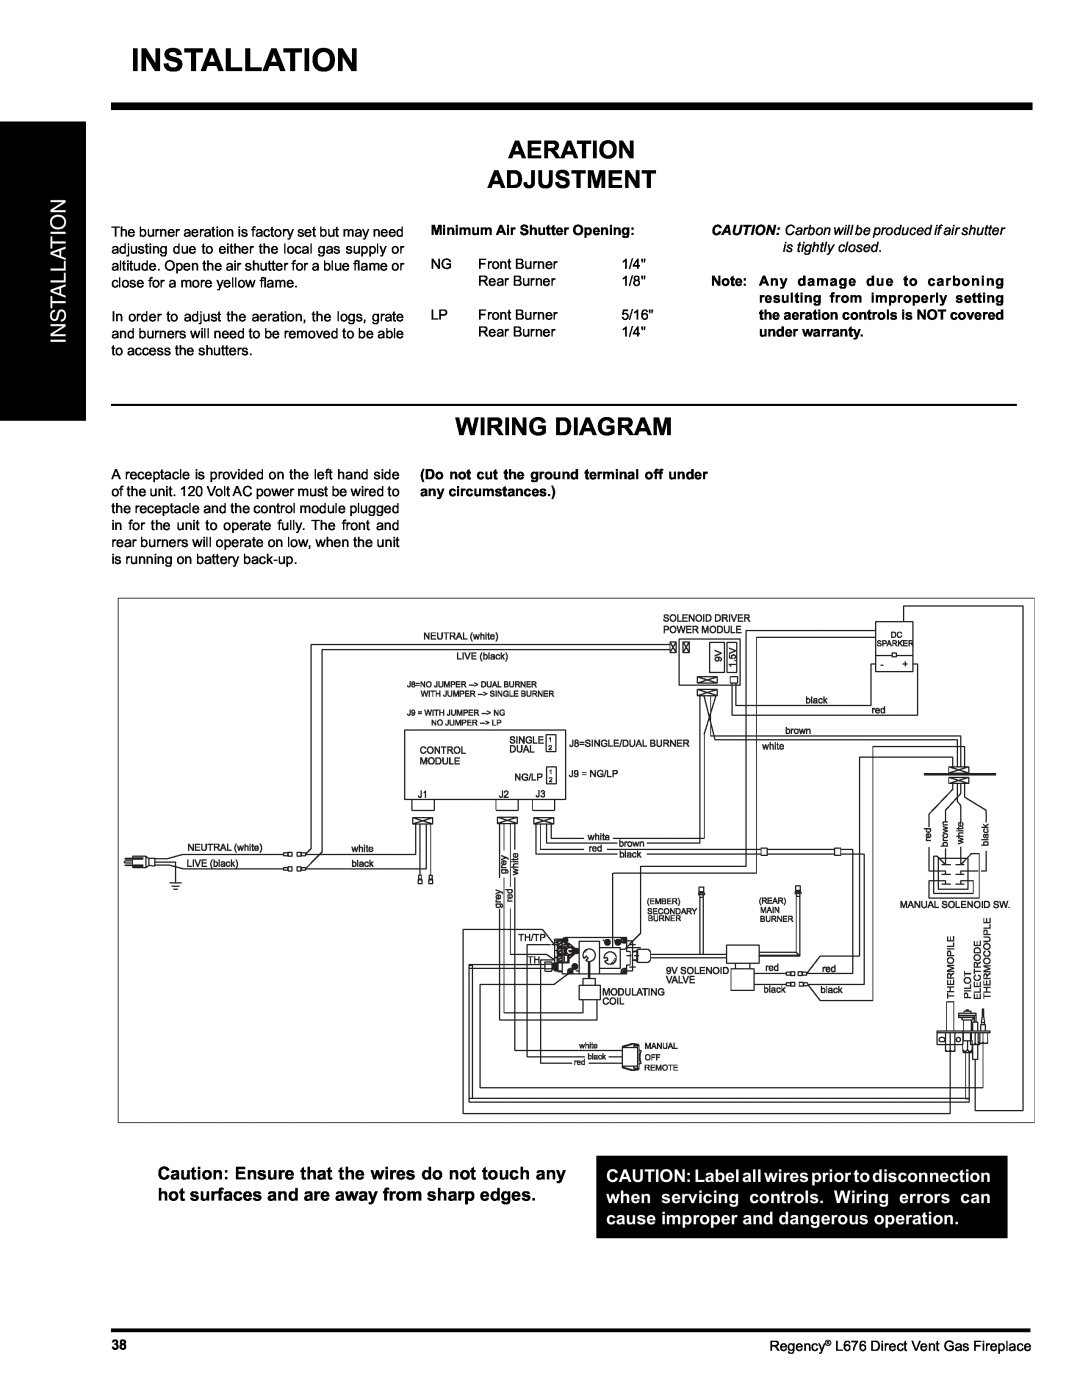 Regency L676 installation manual Installation, Aeration Adjustment, Wiring Diagram, is tightly closed 